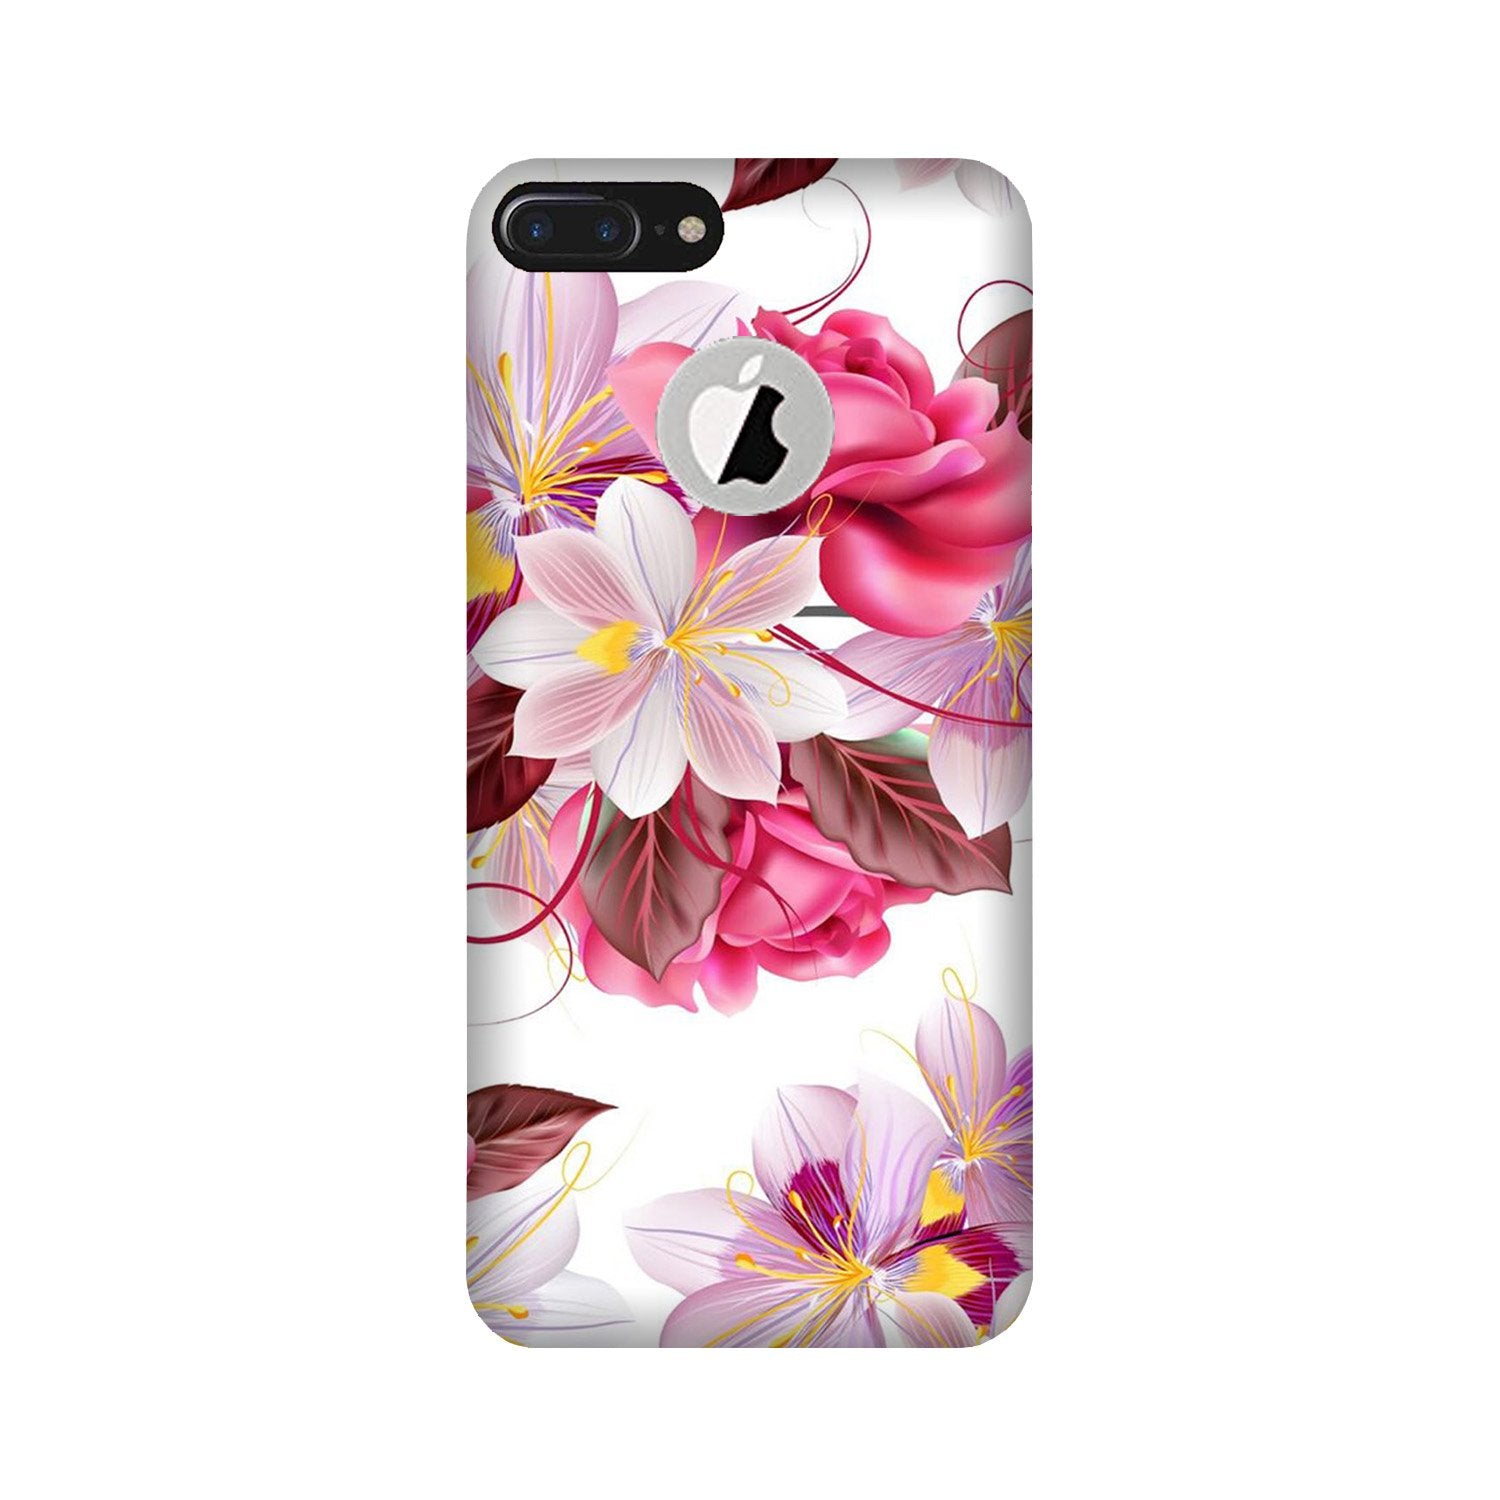 Beautiful flowers Case for iPhone 7 Plus logo cut